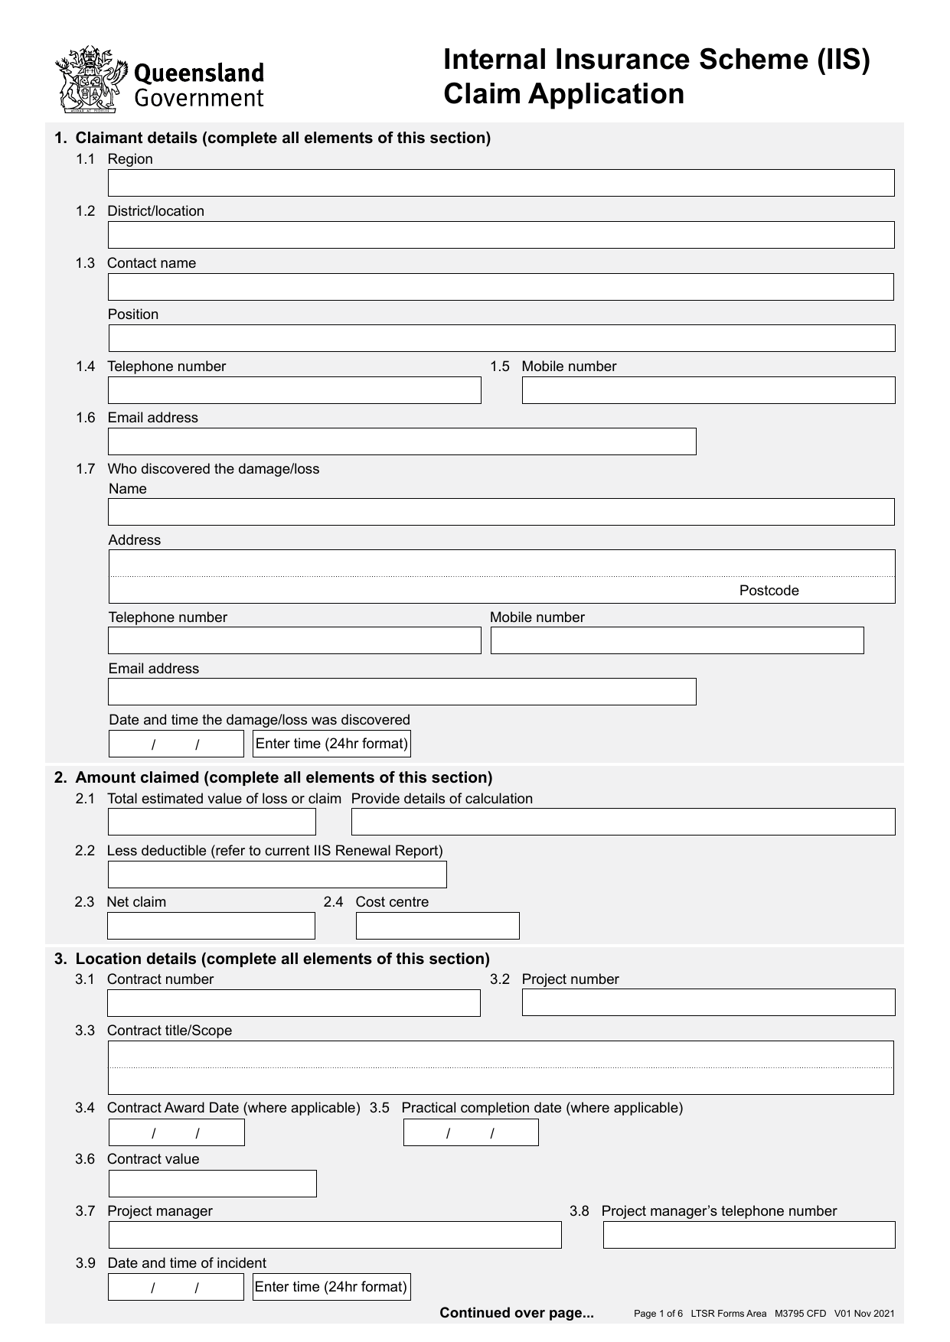 Form M3795 Internal Insurance Scheme (Iis) Claim Application - Queensland, Australia, Page 1